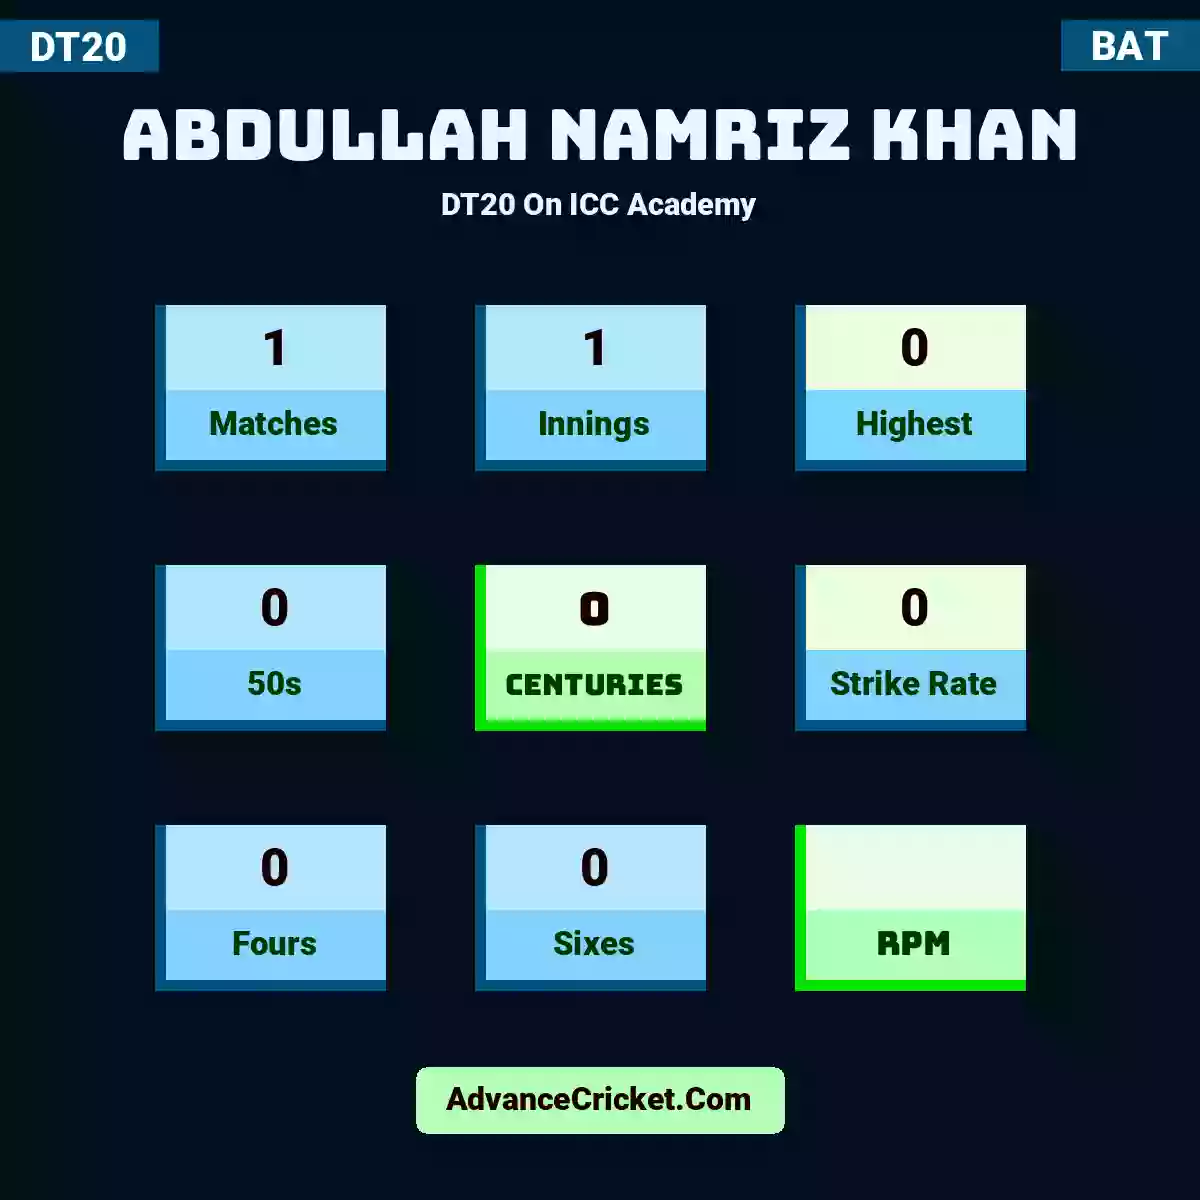 Abdullah Namriz Khan DT20  On ICC Academy, Abdullah Namriz Khan played 1 matches, scored 0 runs as highest, 0 half-centuries, and 0 centuries, with a strike rate of 0. A.Khan hit 0 fours and 0 sixes.